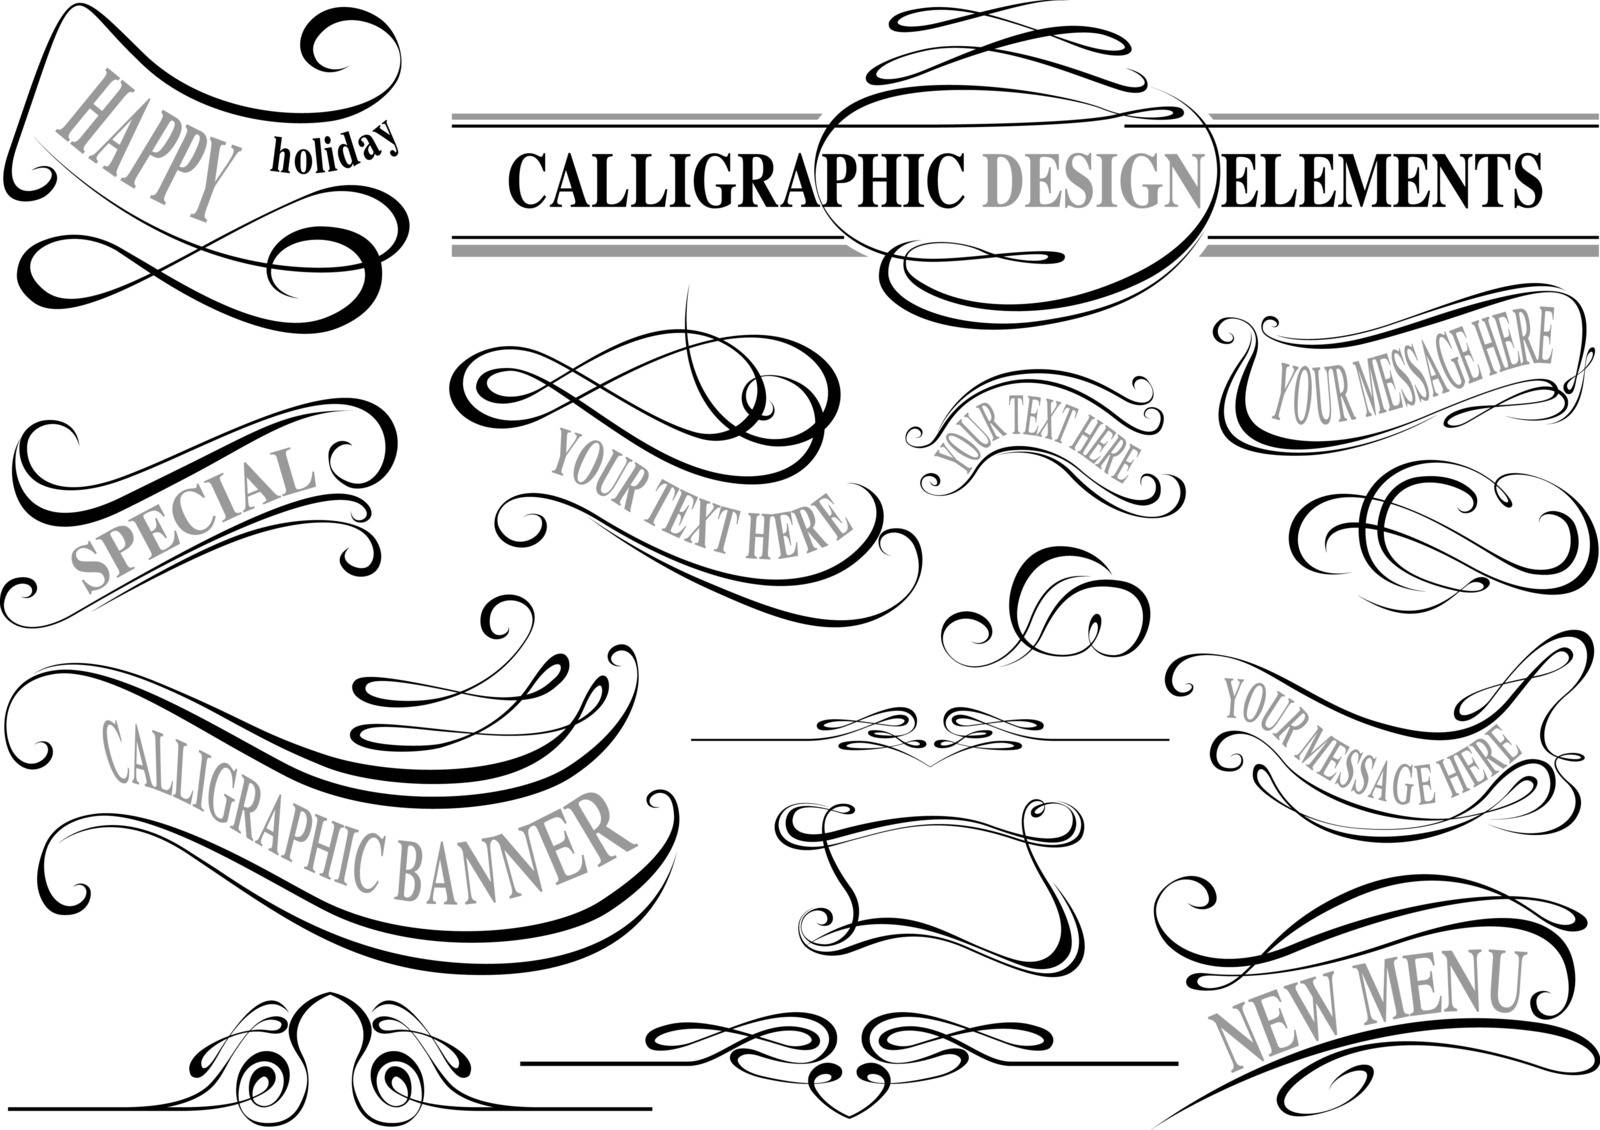 Calligraphic Elements Collection - Design Elements Illustration, Vector